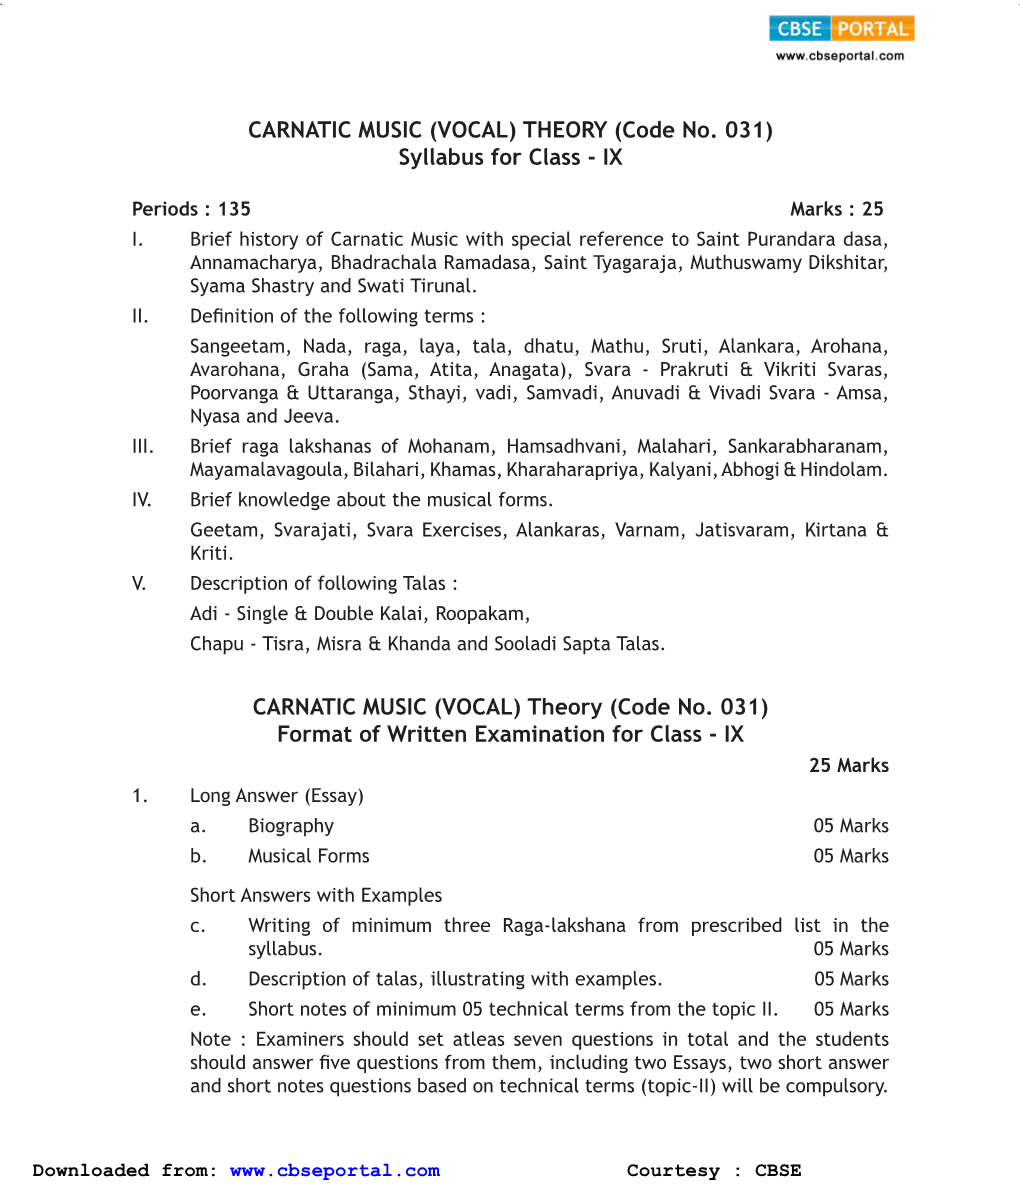 CARNATIC MUSIC (VOCAL) THEORY (Code No